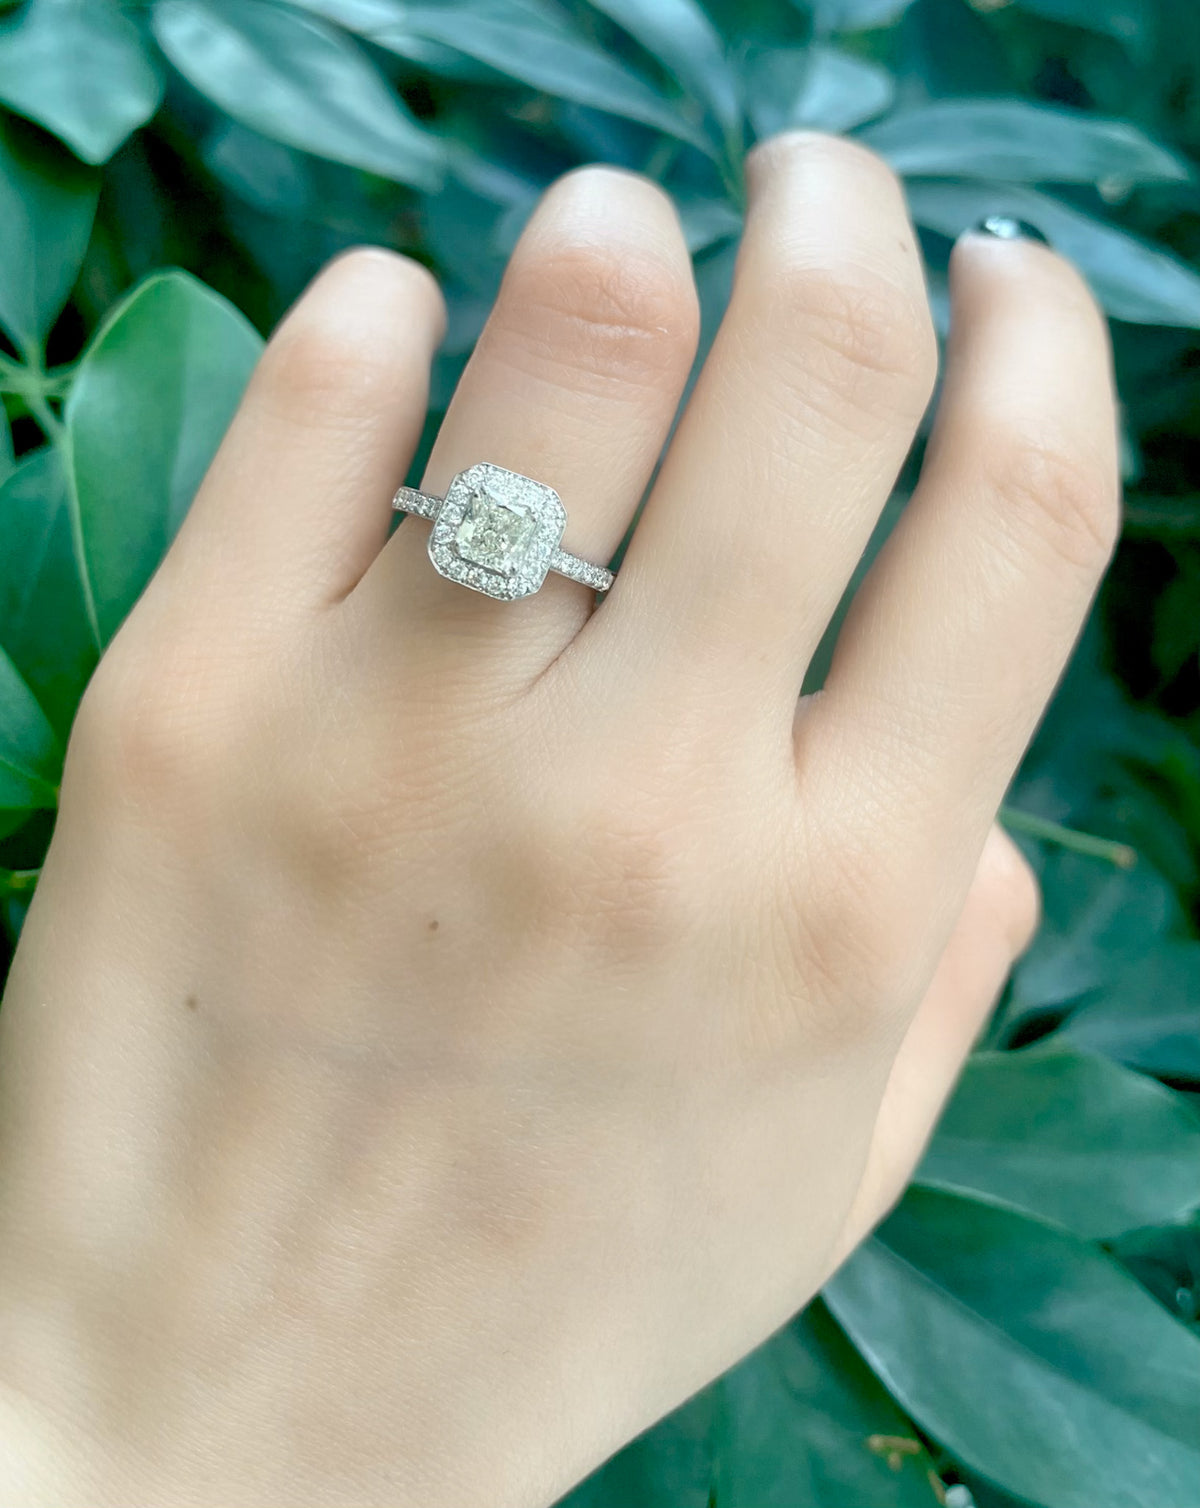 14K White Gold 1.41cttw Diamond Engagement Ring, Size 6